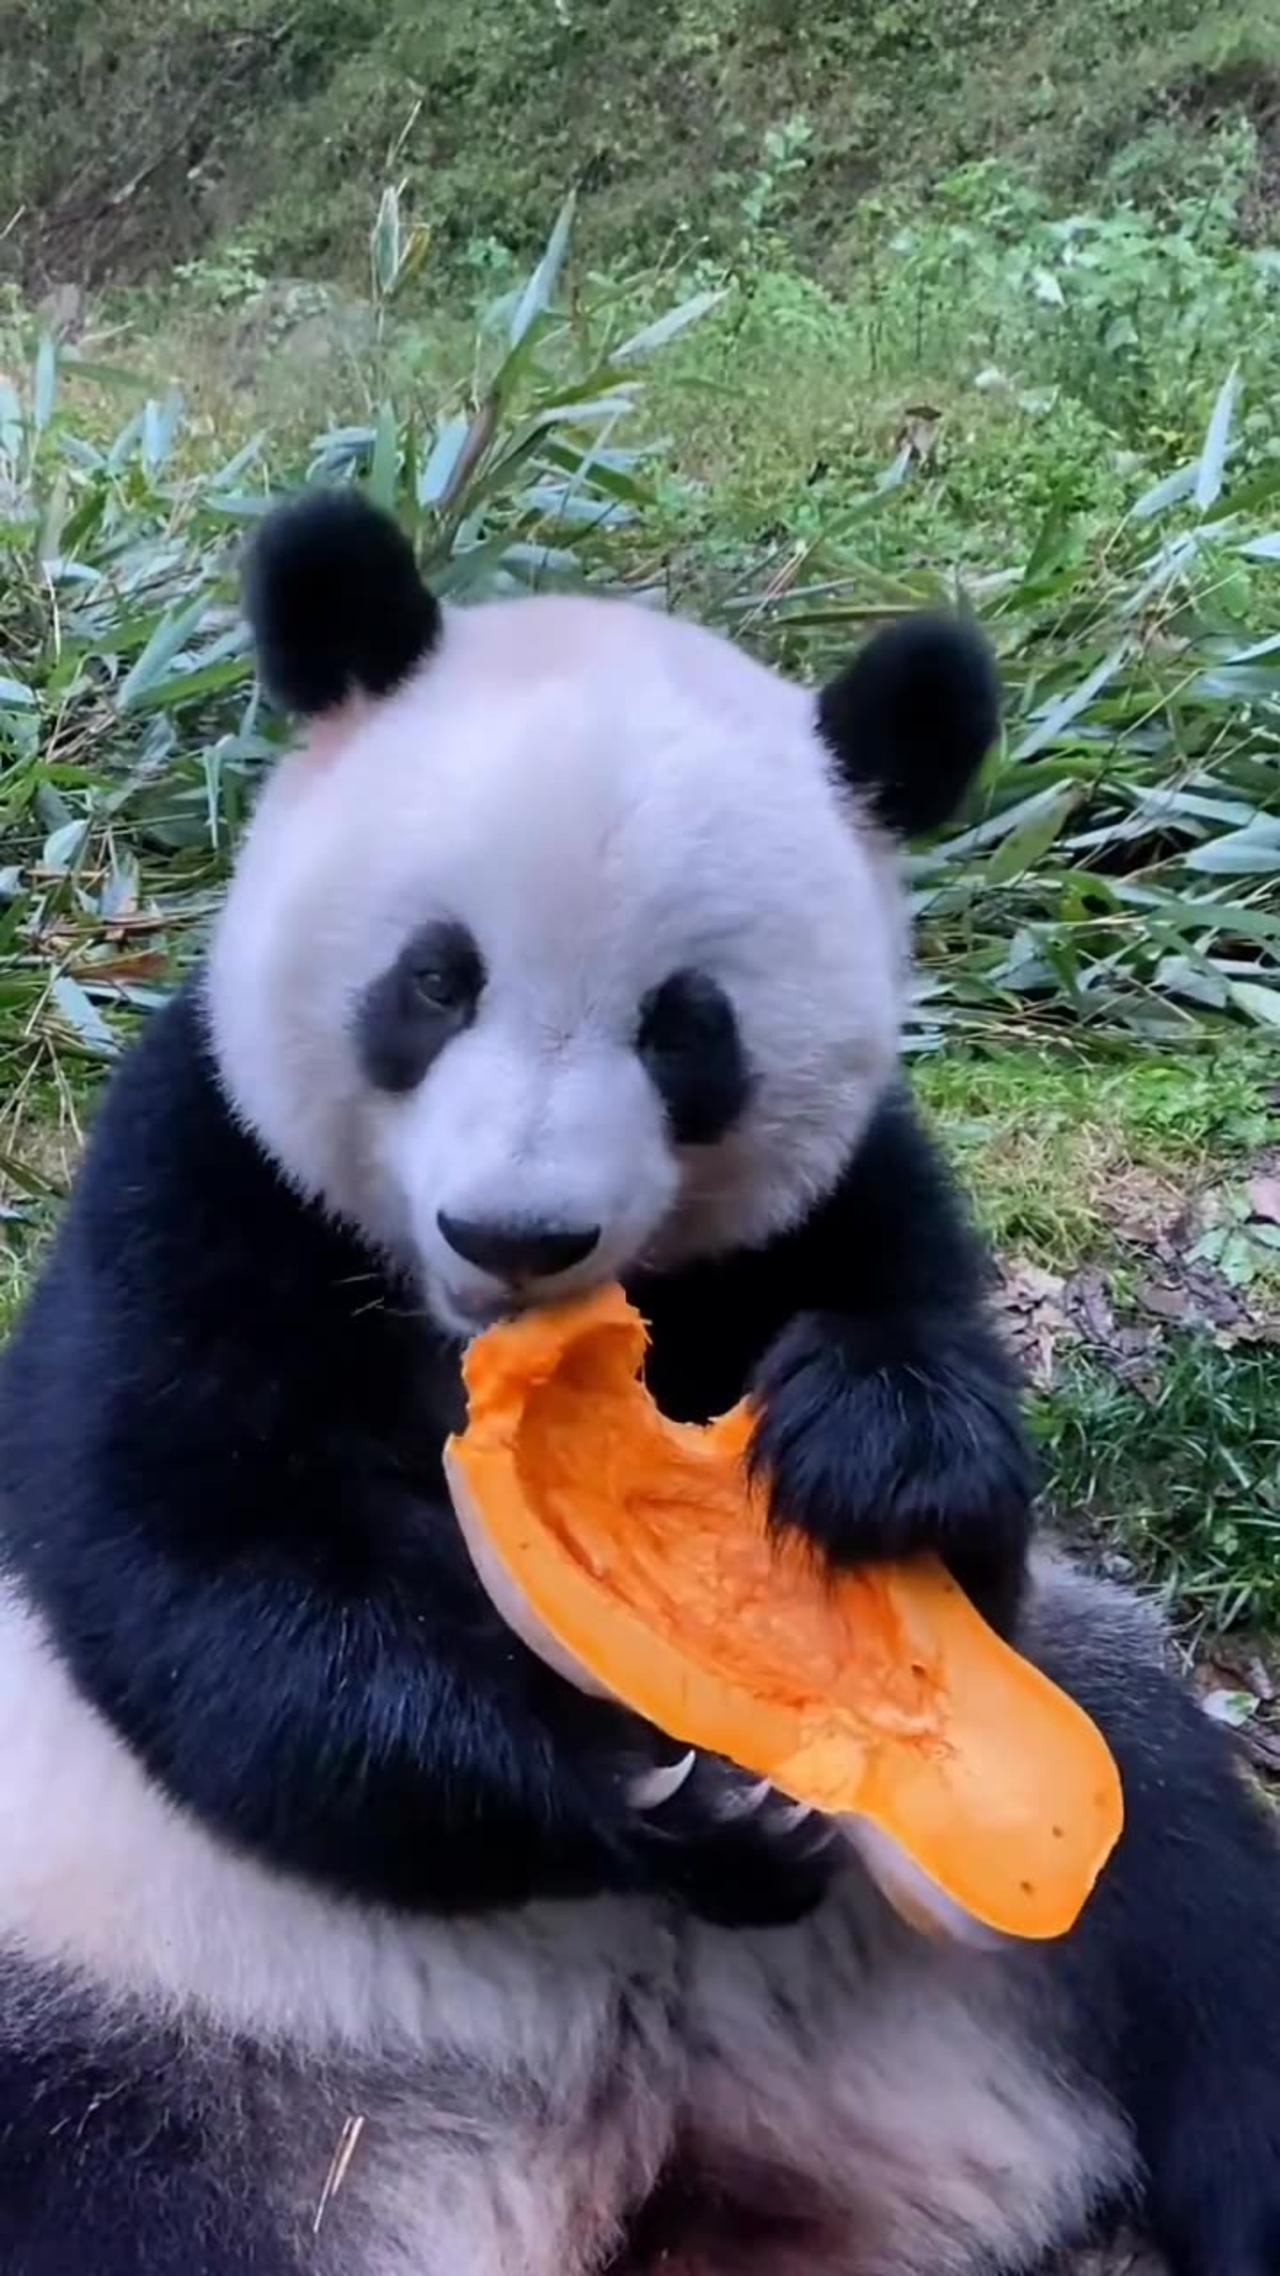 Chinese giant pandas eat watermelon